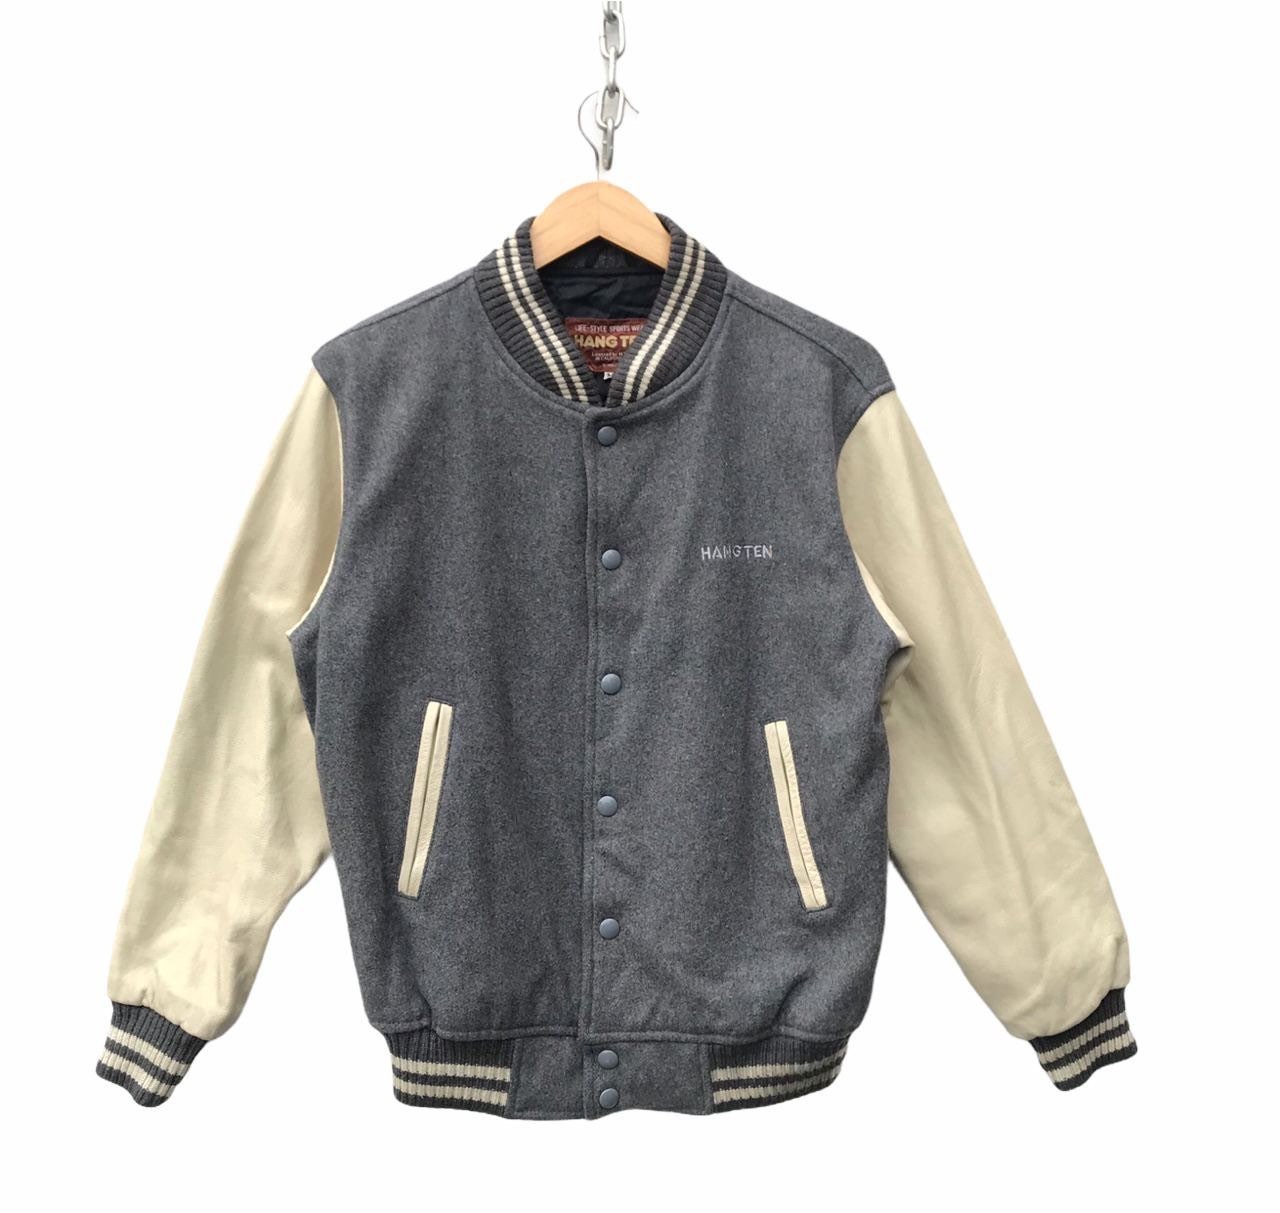 Vintage Hang Ten Varsity Jacket Streetwear Jacket Hang Ten Made in Japan  Jacket TTS Small Refer Measurements -  Canada